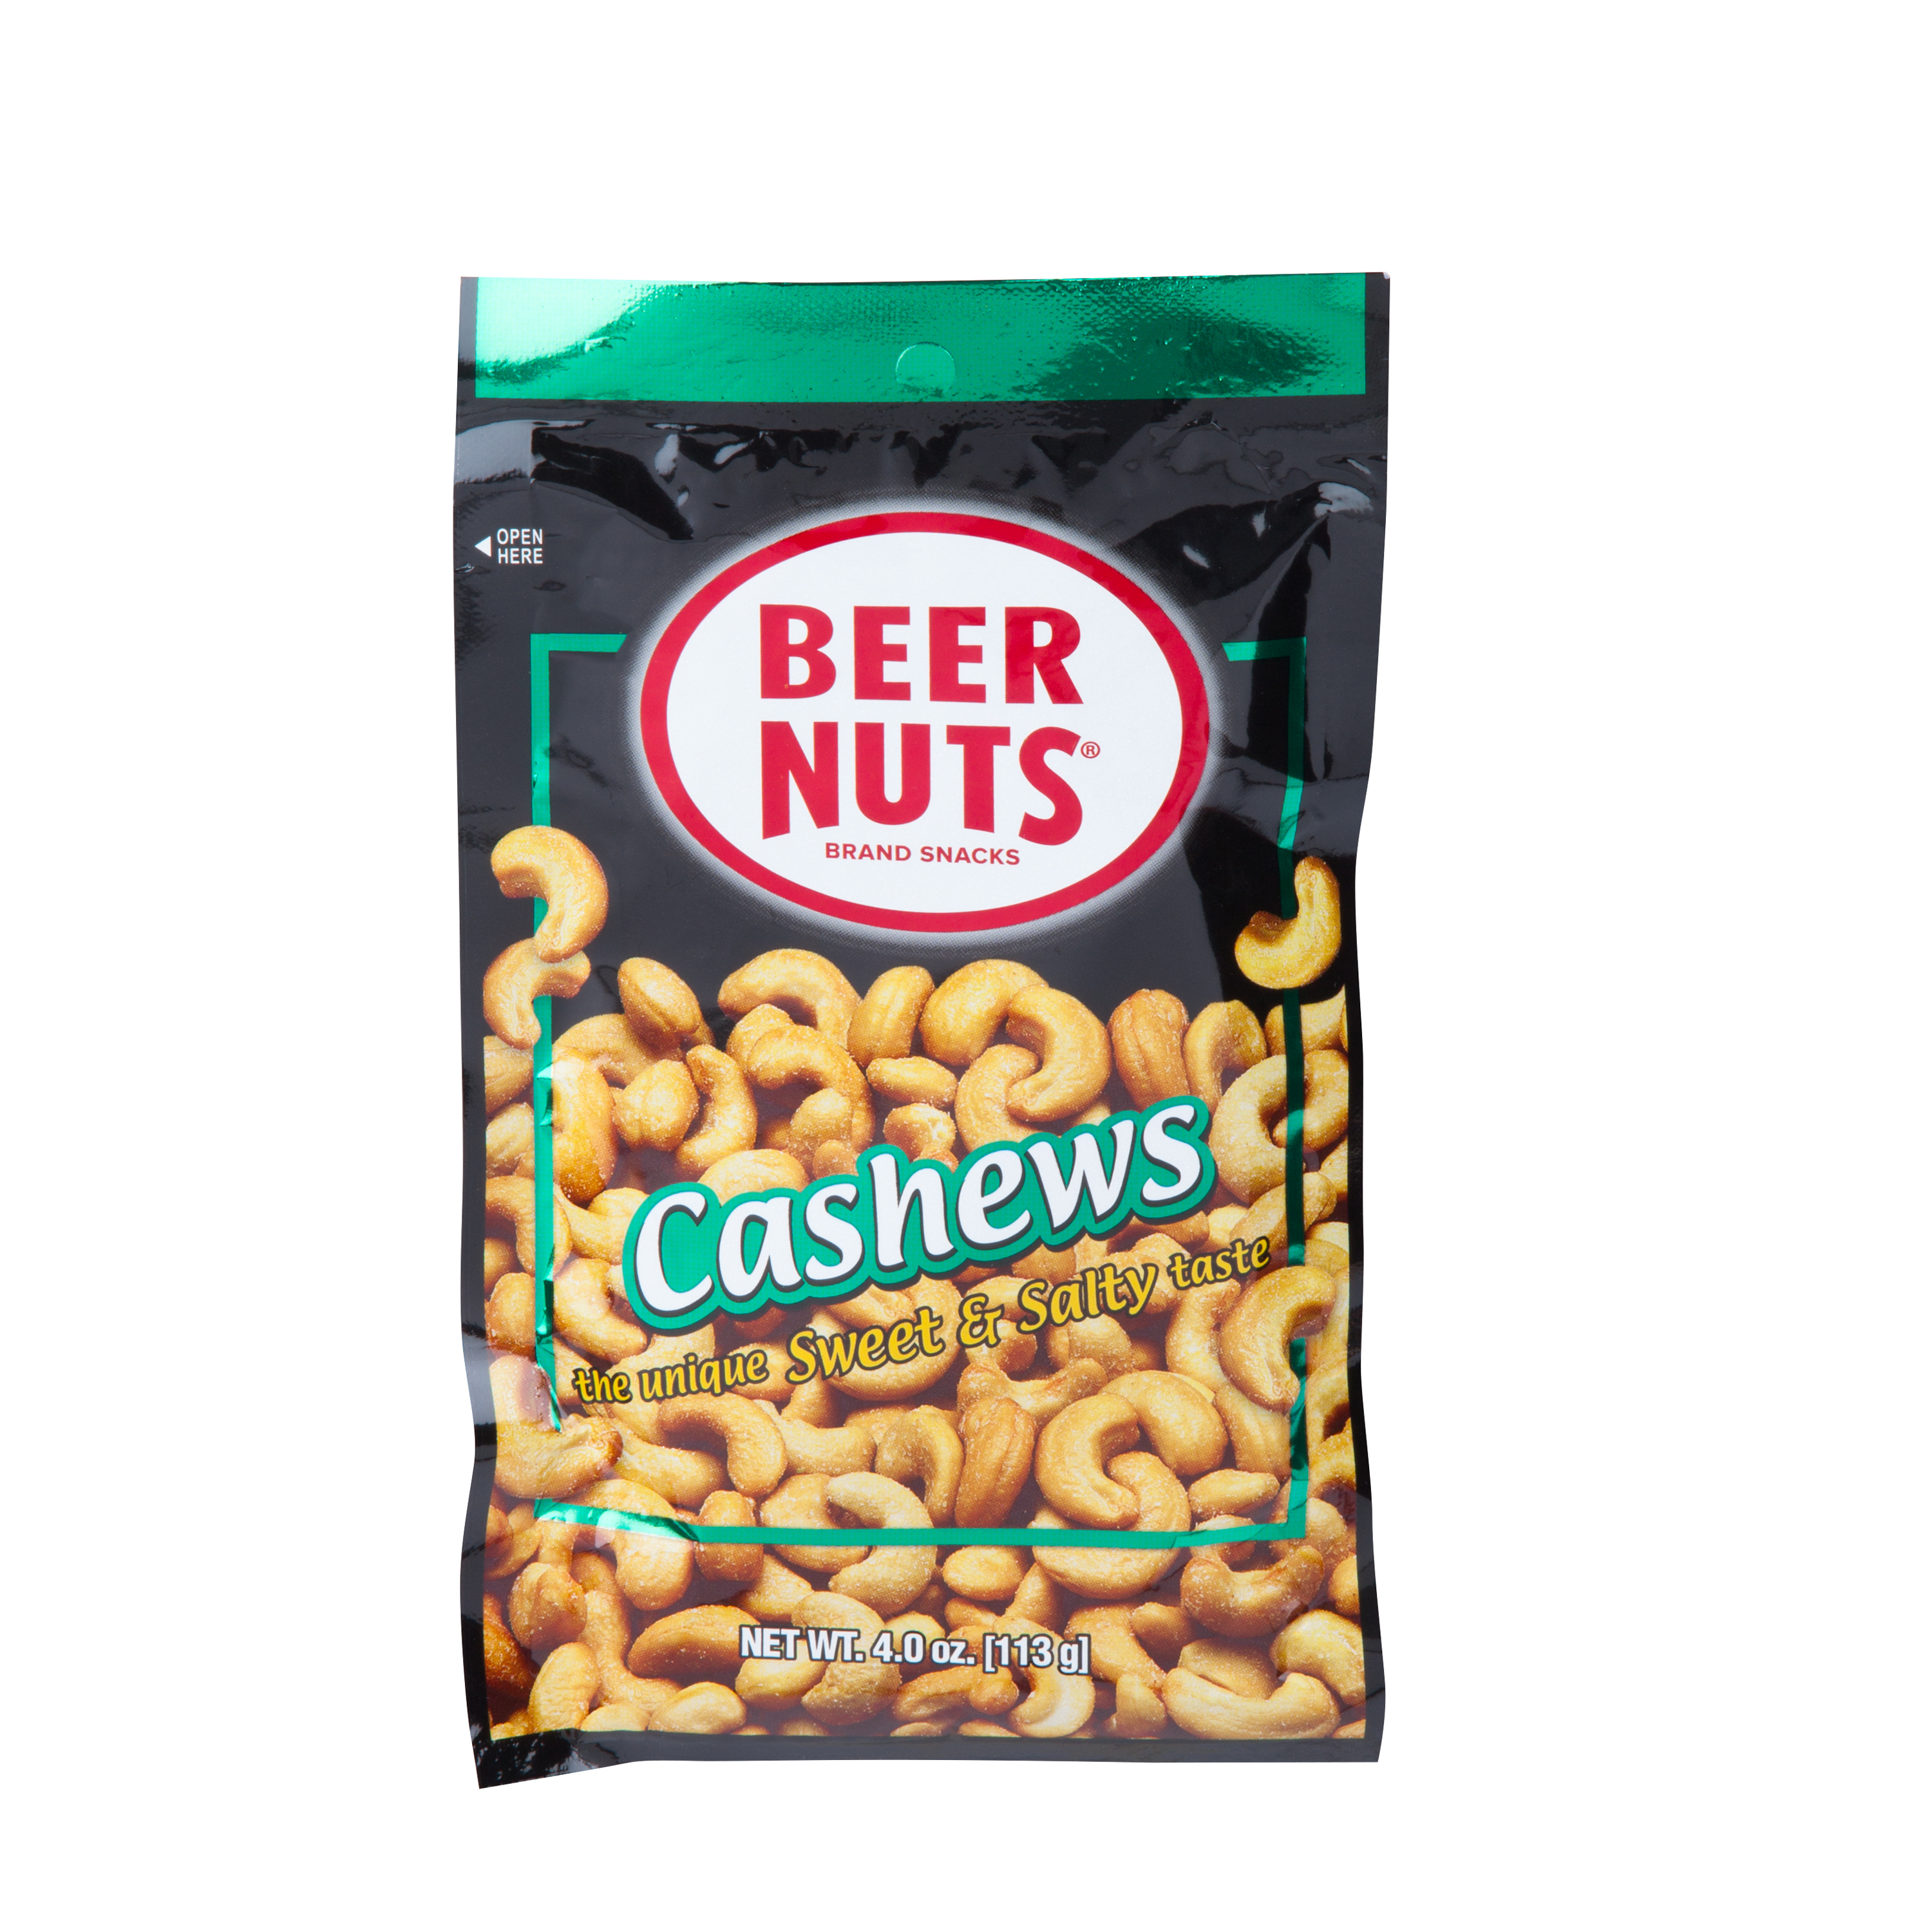 Beer nuts cashews 4oz